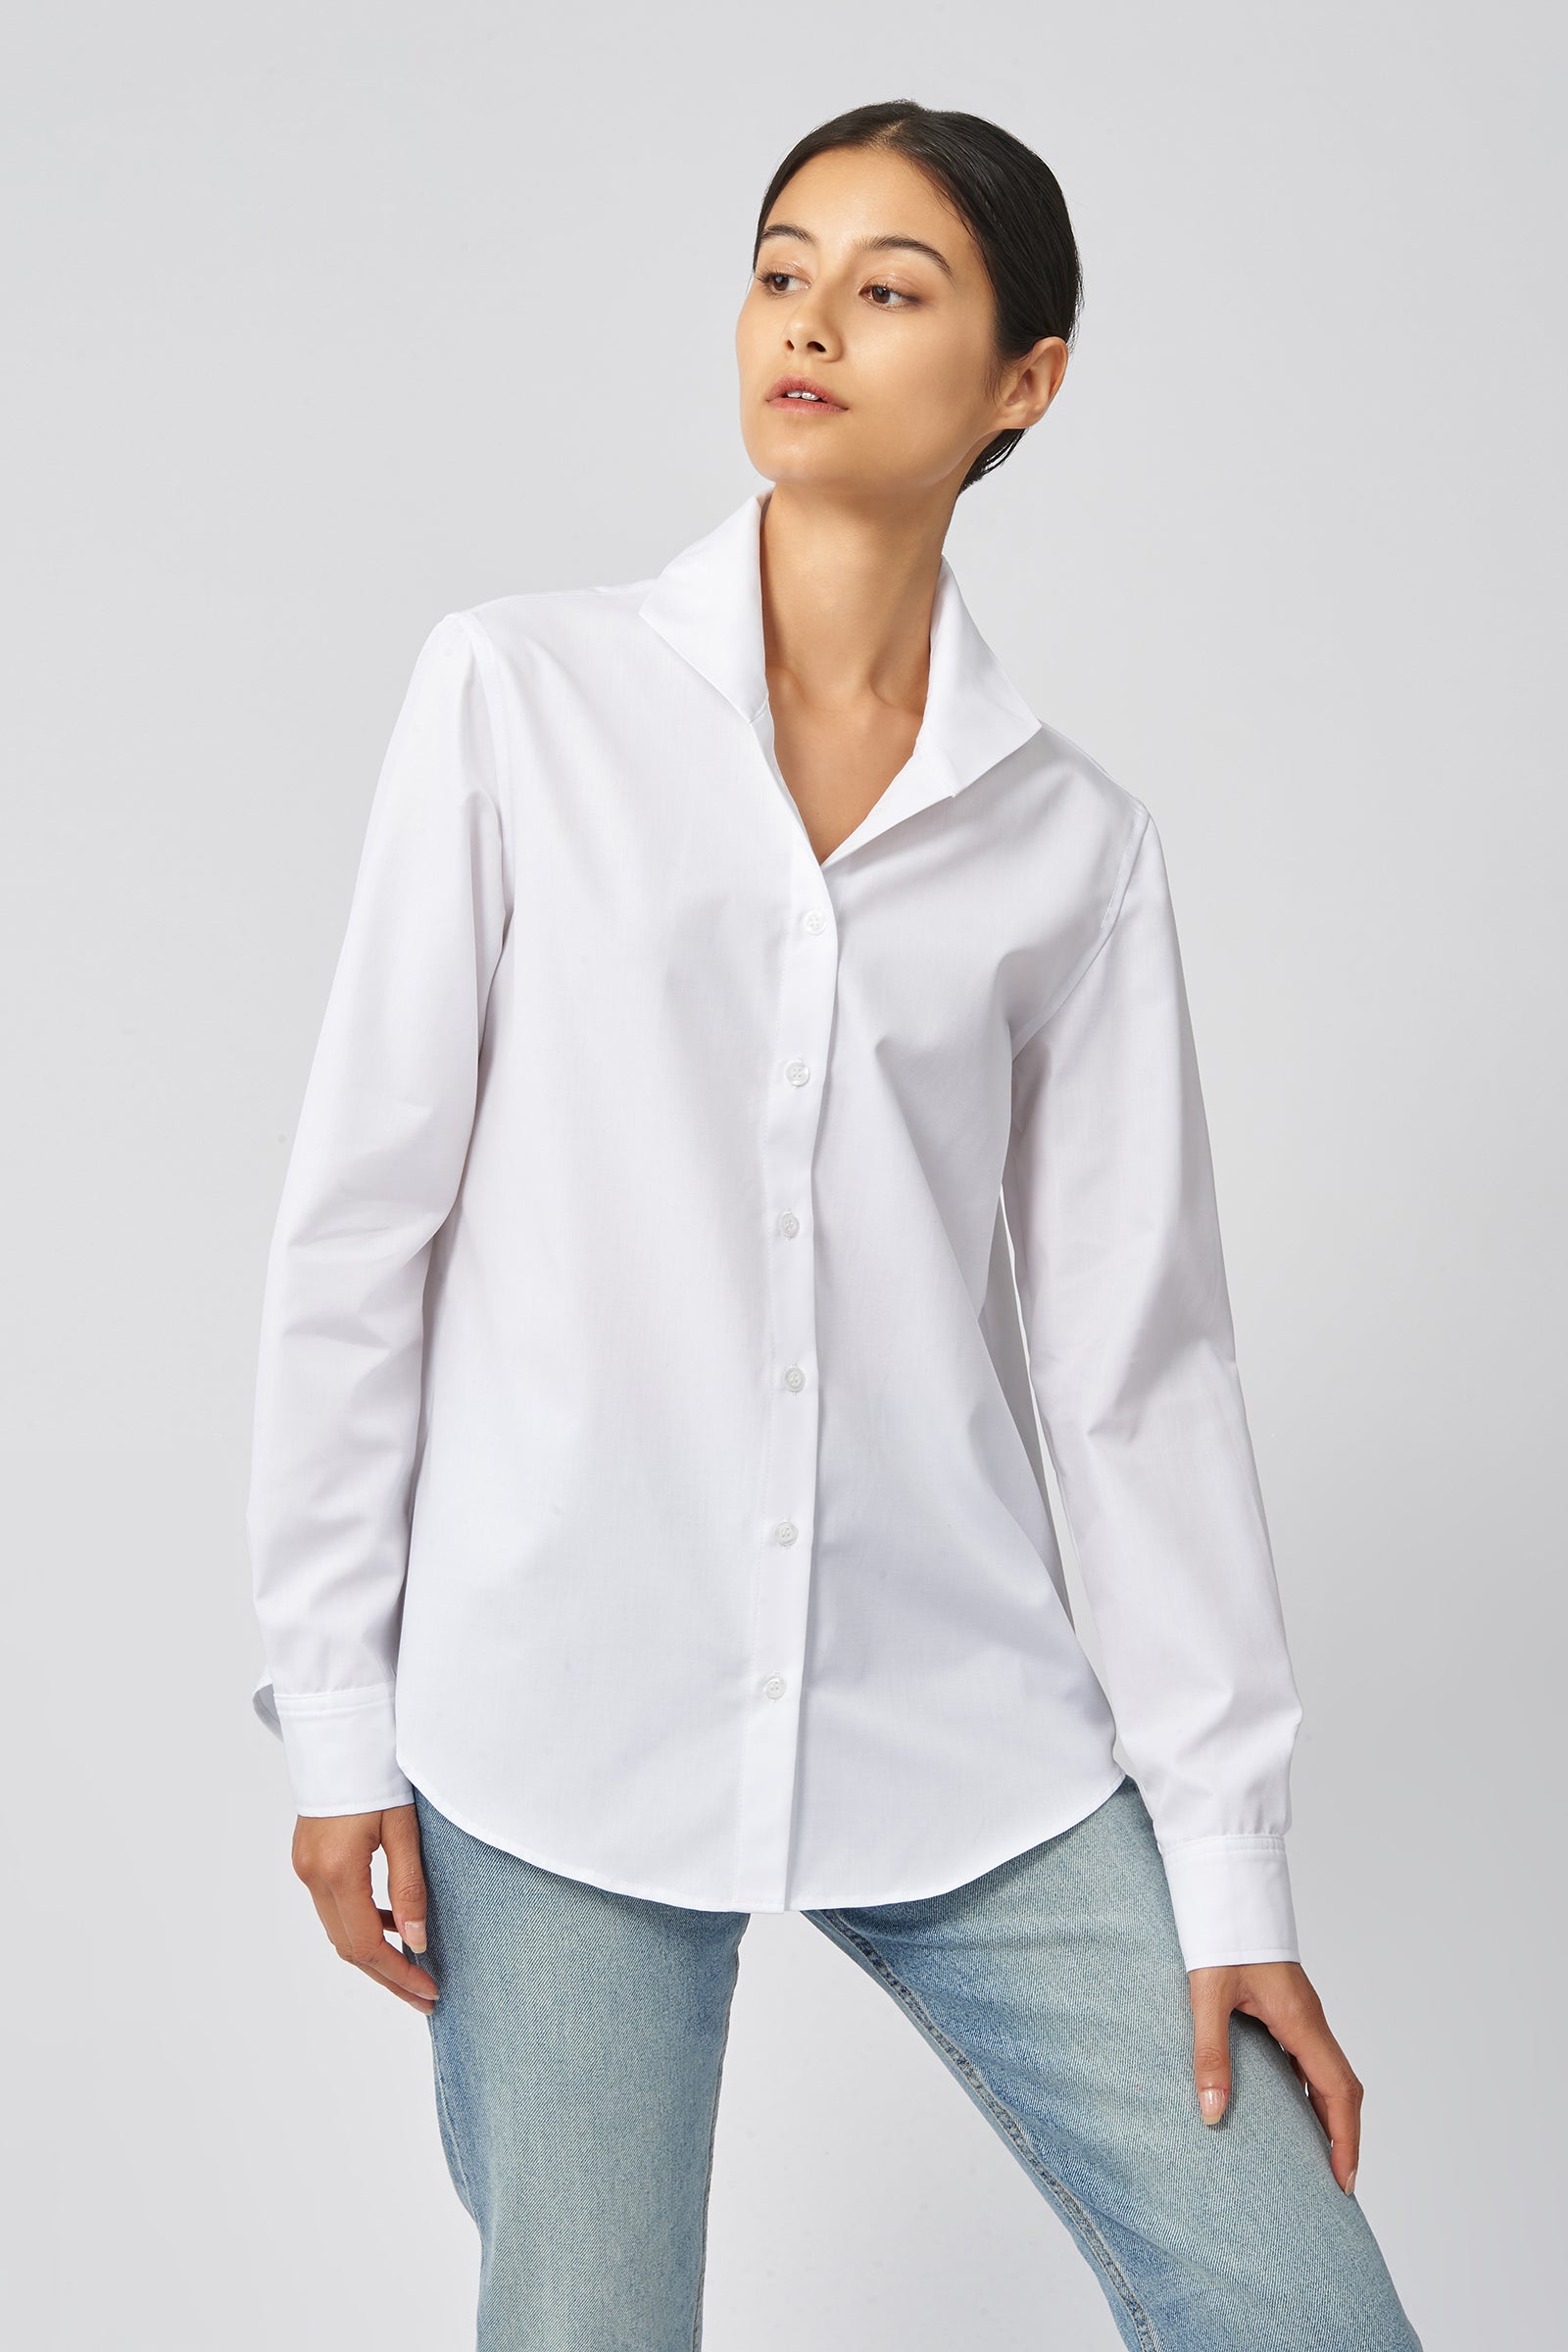 Kal Rieman Ginna Box Pleat Shirt in White Ottoman on Model Front Alternate View